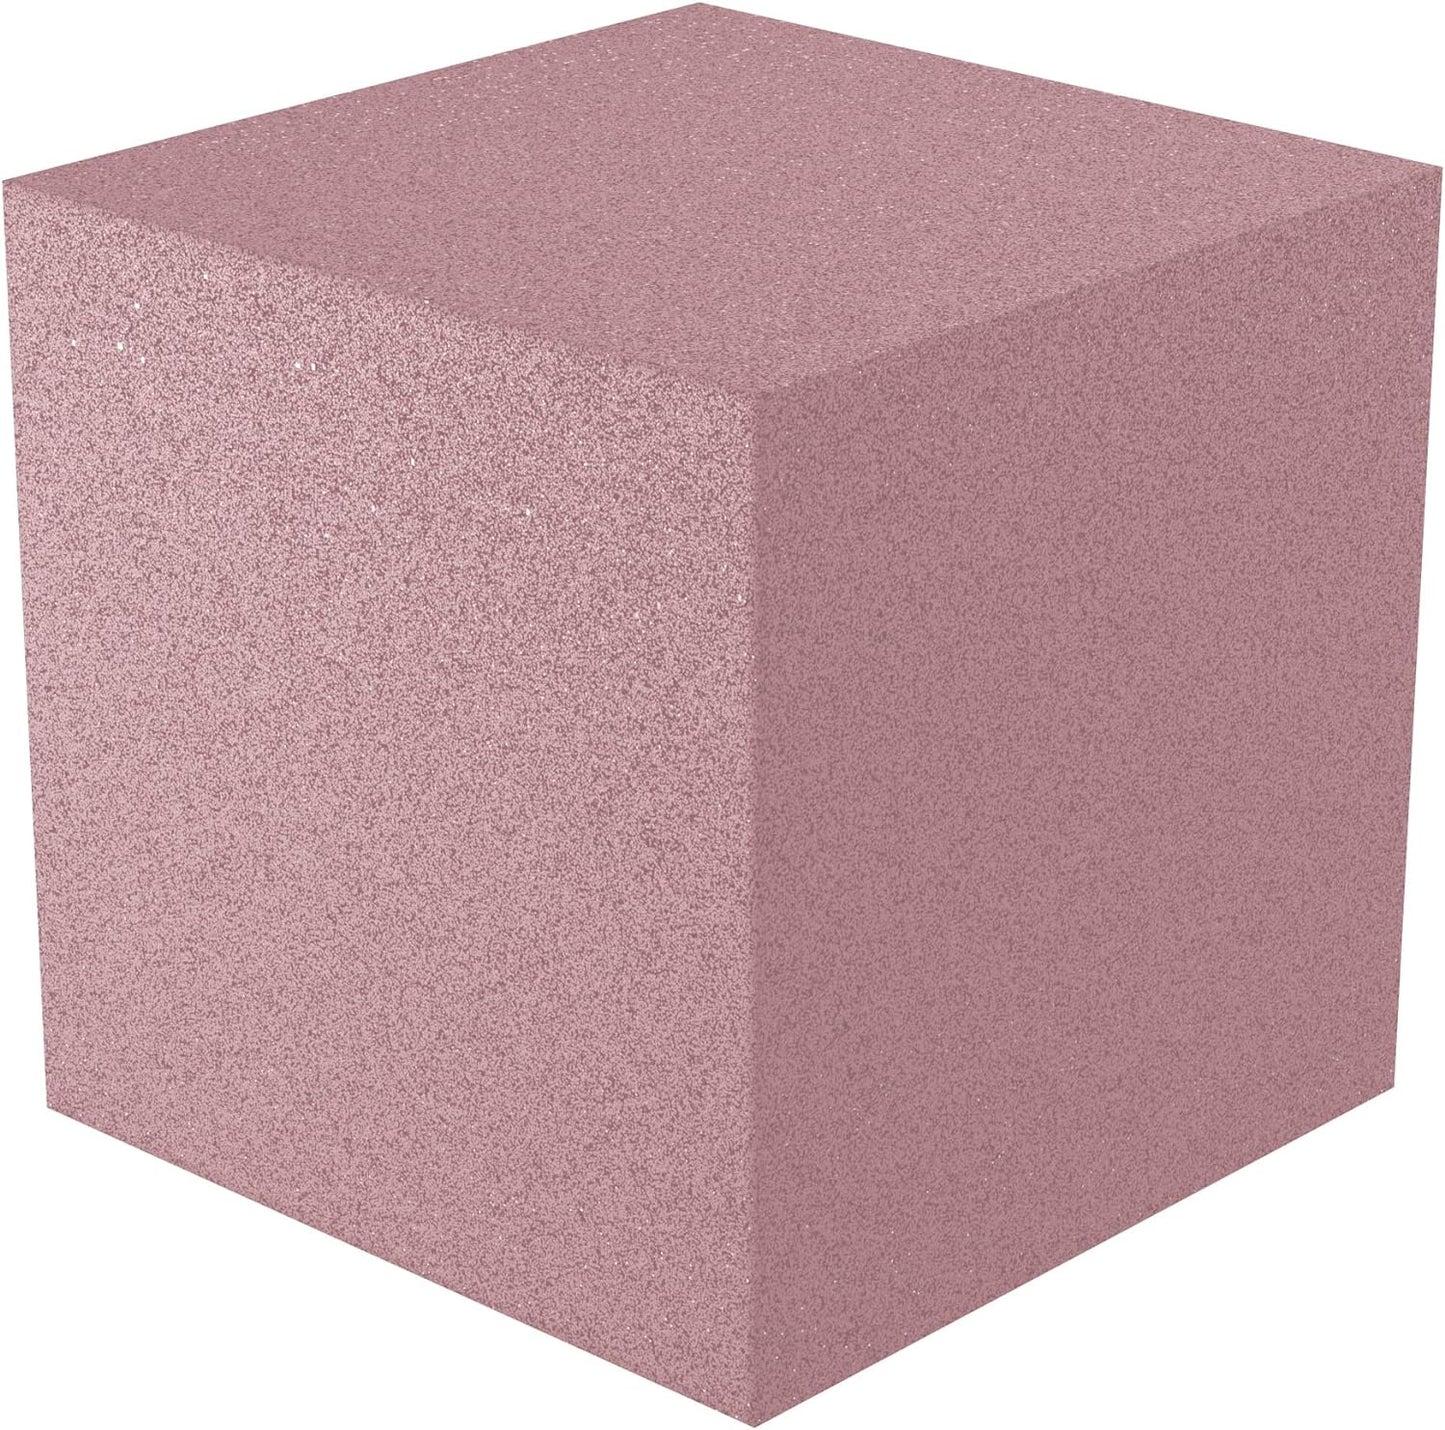 12x12x12 acoustic foam corner block - rosy beige foam square